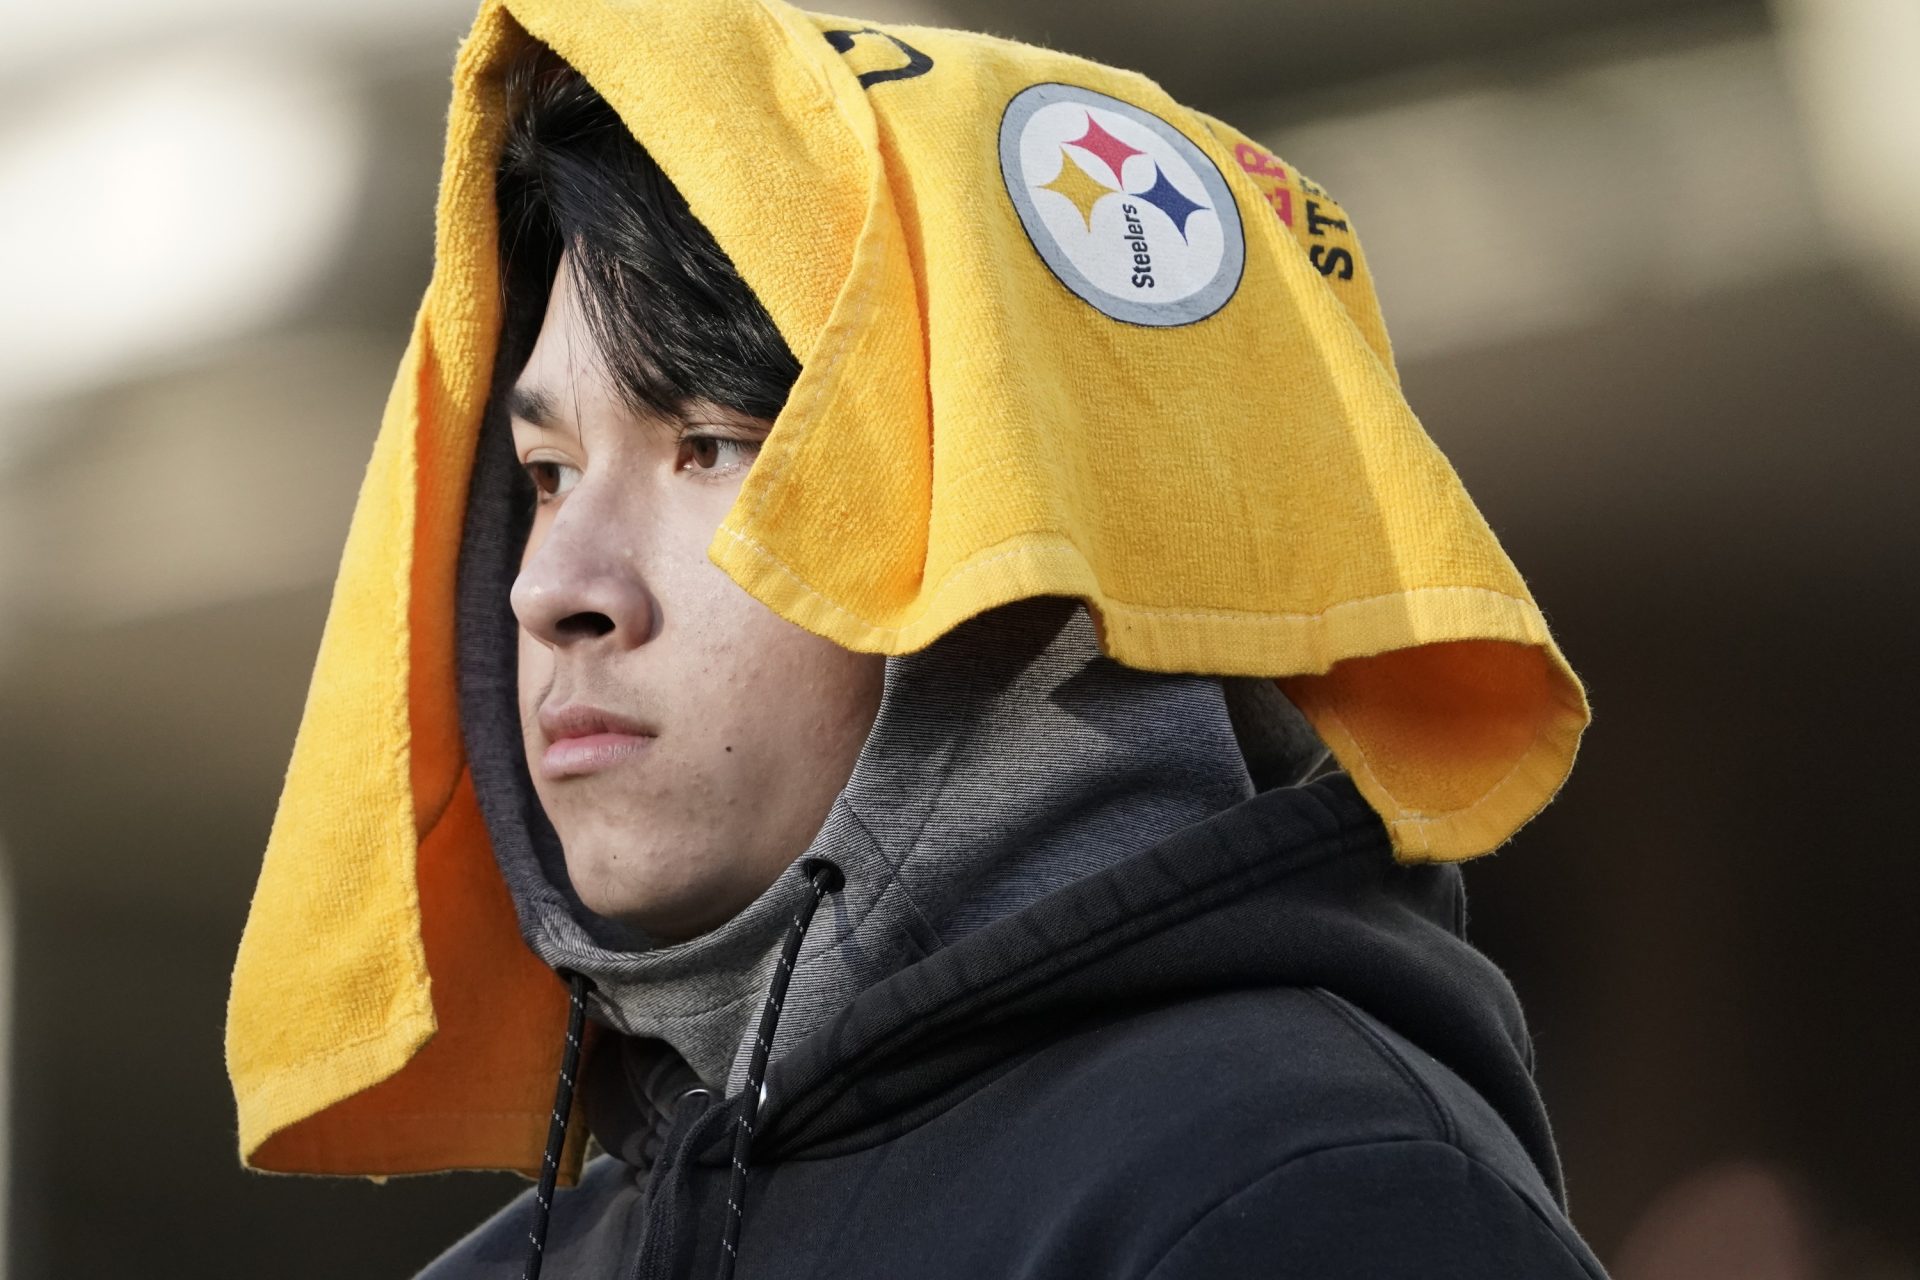 A Pittsburgh Steelers fan wears a Terrible Towel on his head as his team loses to the Cincinnati Bengals in an NFL football game, Sunday, Nov. 28, 2021, in Cincinnati.